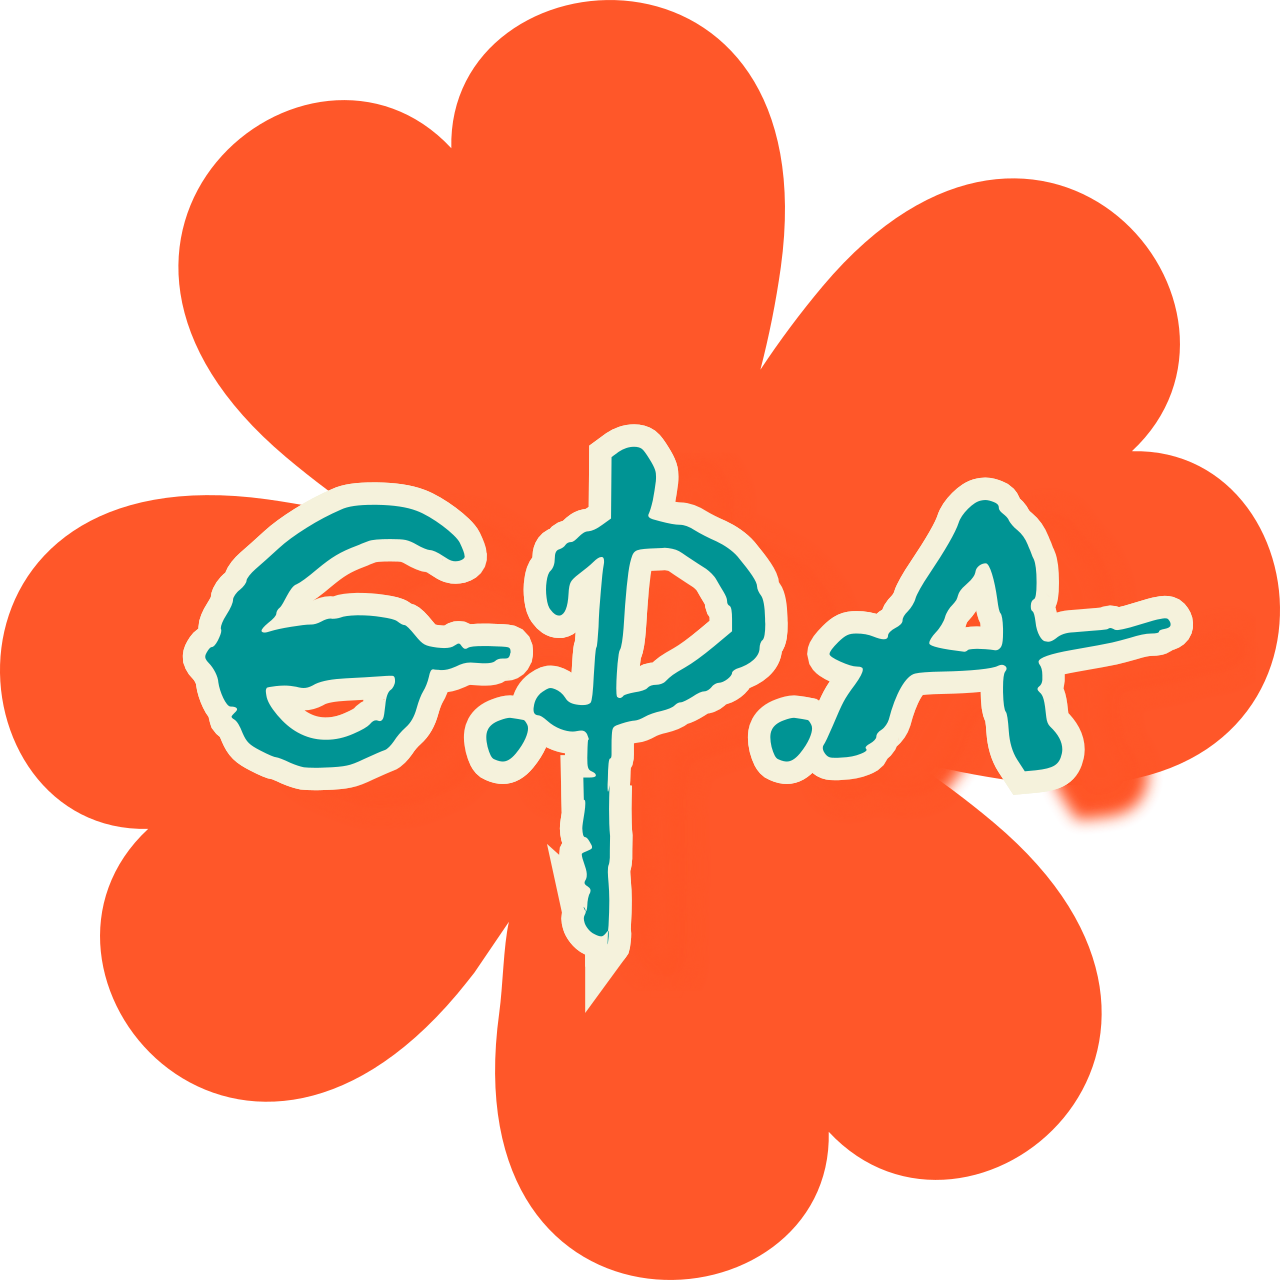 G.P.A's logo